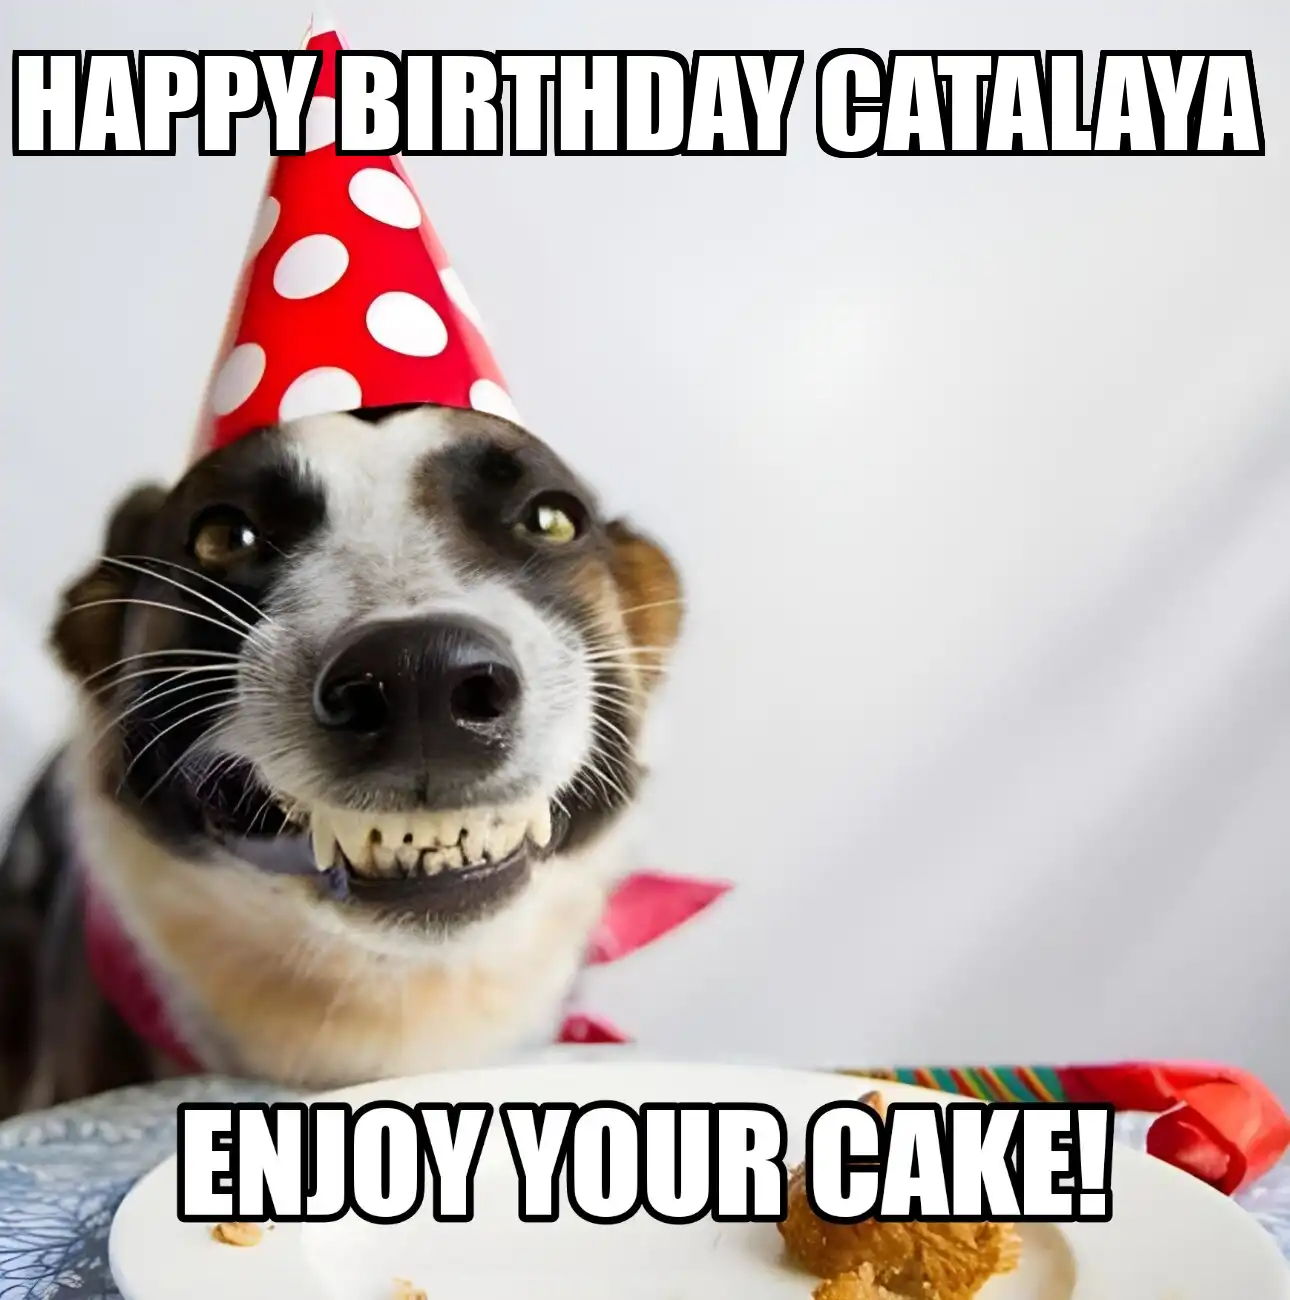 Happy Birthday Catalaya Enjoy Your Cake Dog Meme